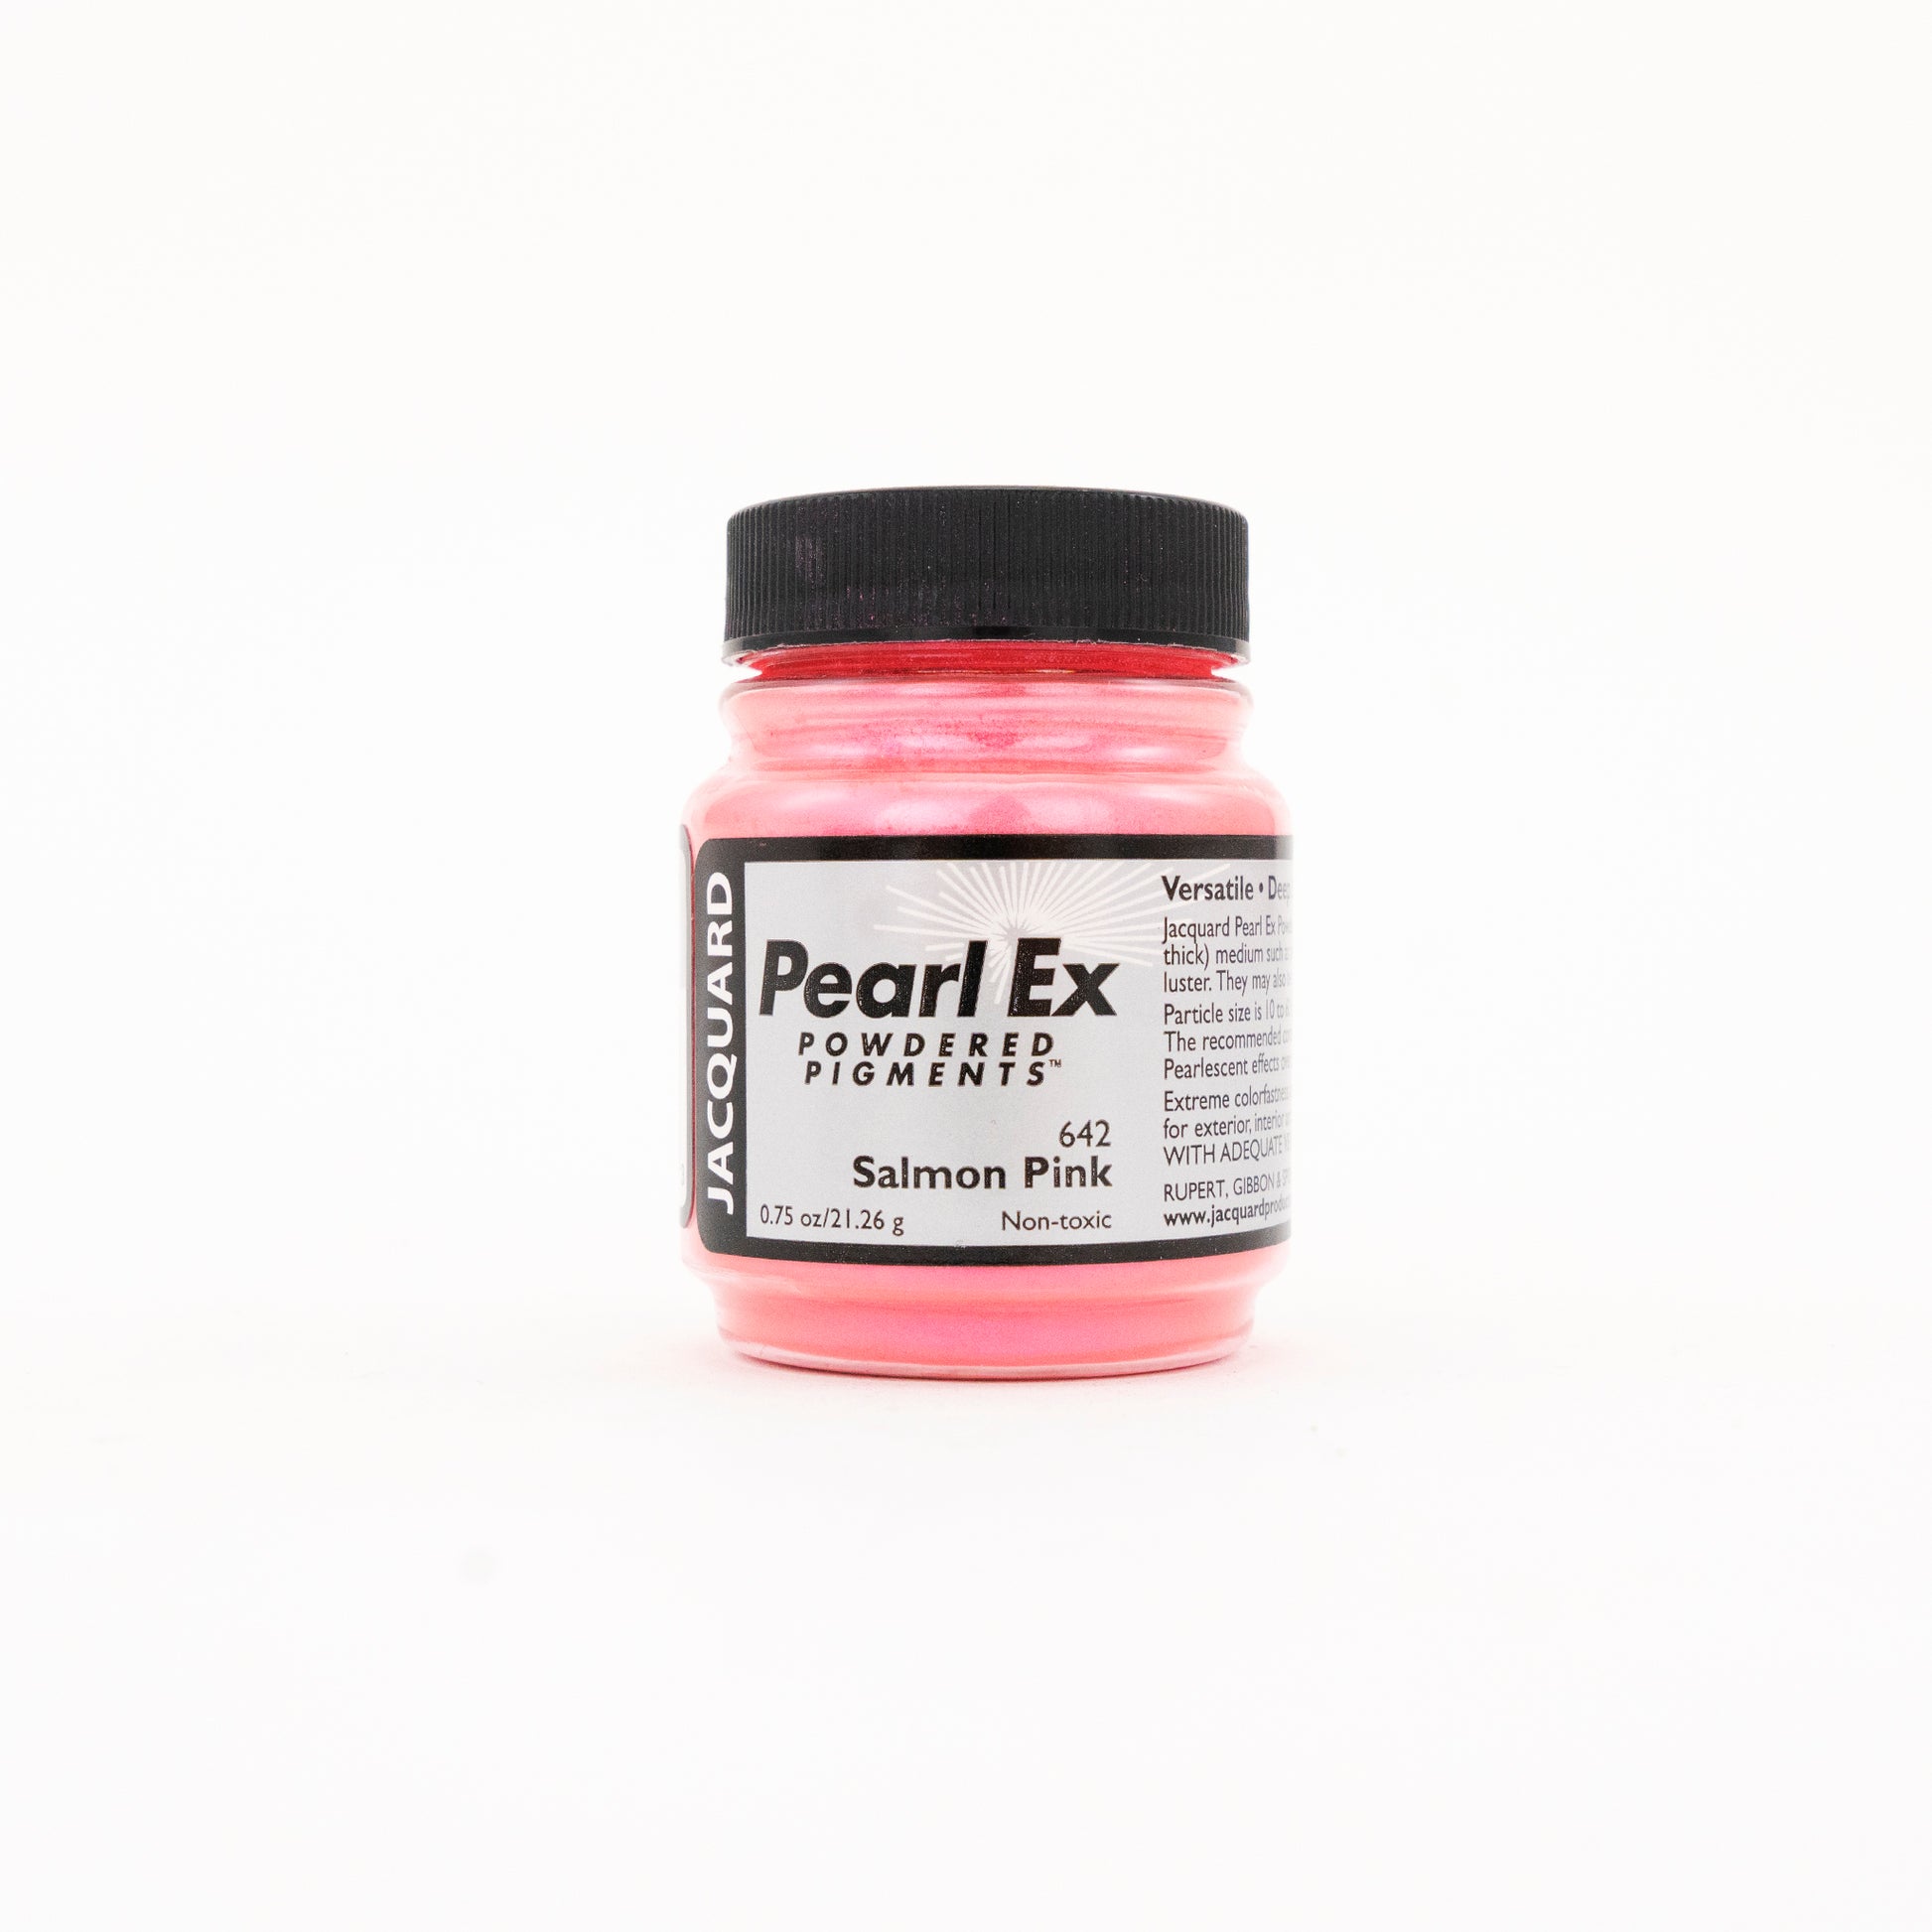 Jacquard PearlEx Powdered Pigments - 0.75 oz jars - Salmon Pink by Jacquard - K. A. Artist Shop